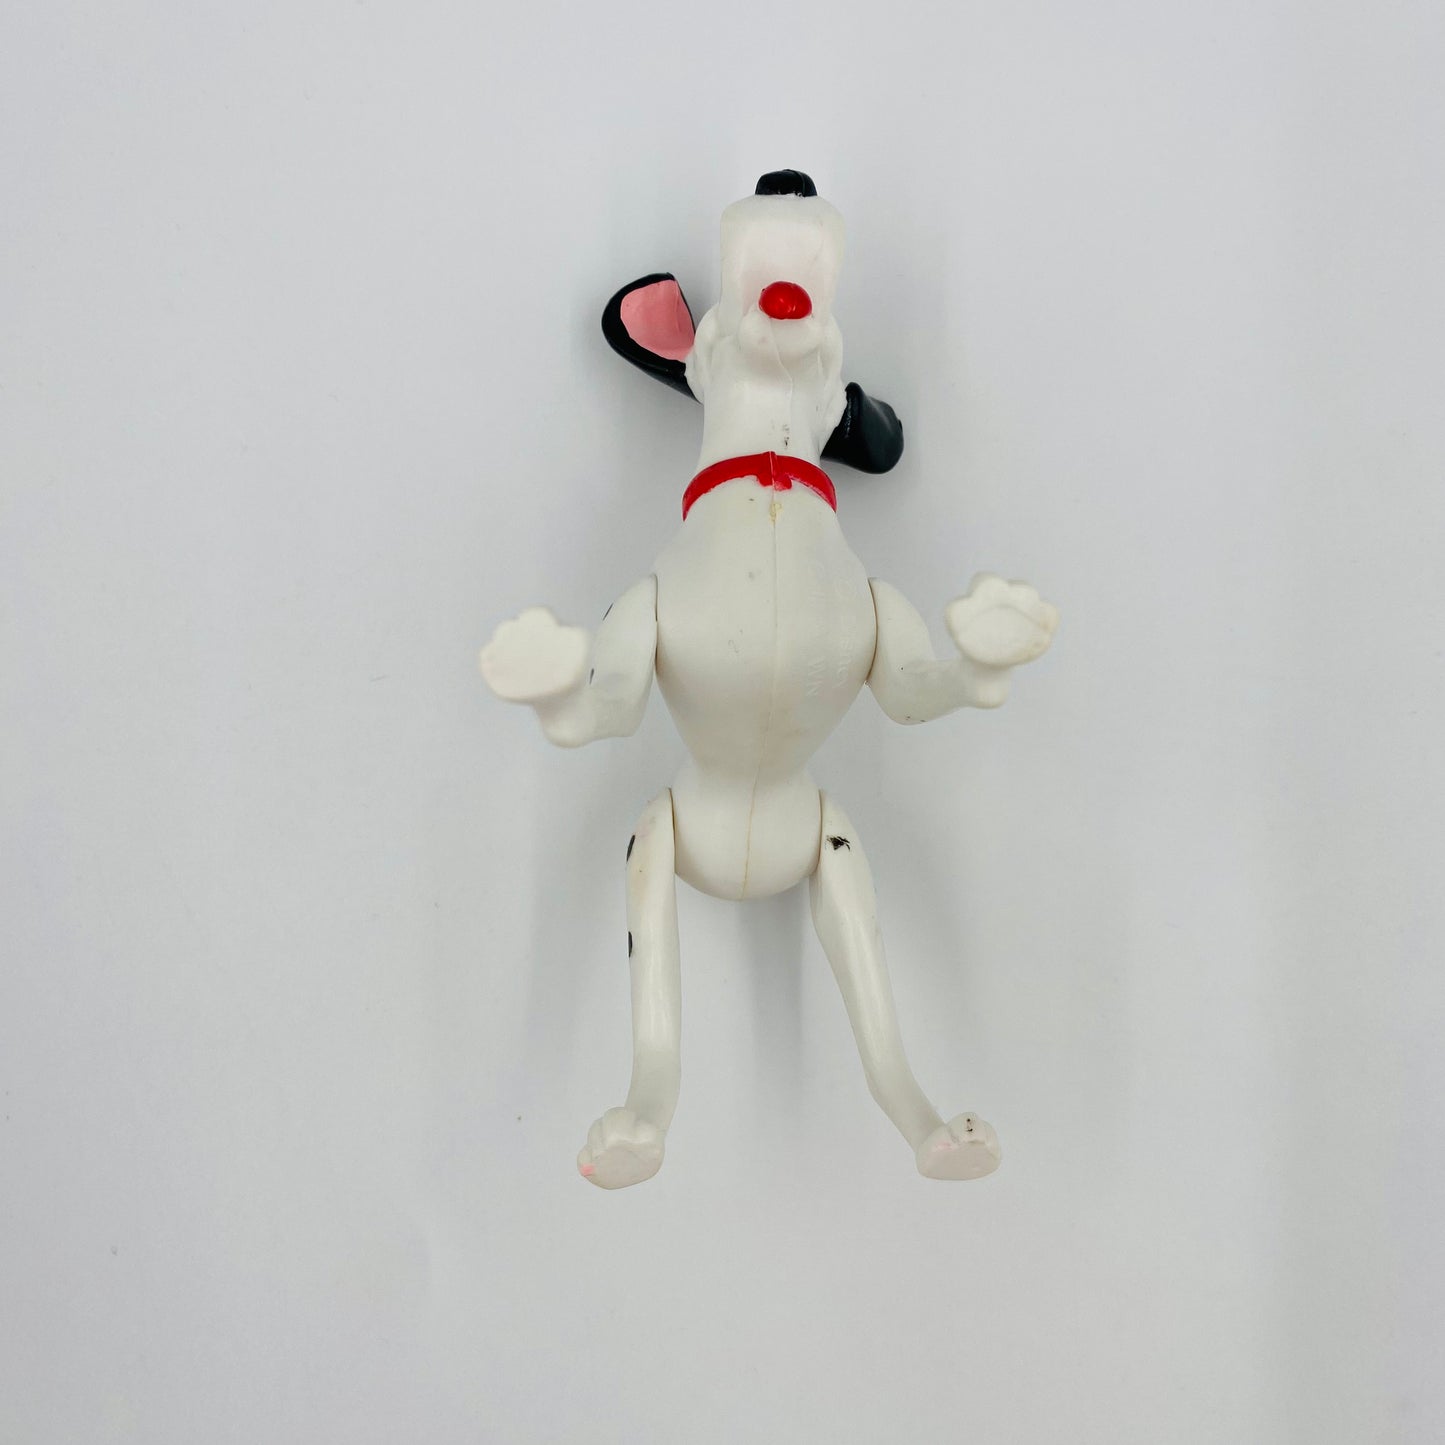 101 Dalmatians Pongo McDonald's Happy Meal toy figure (1991) loose